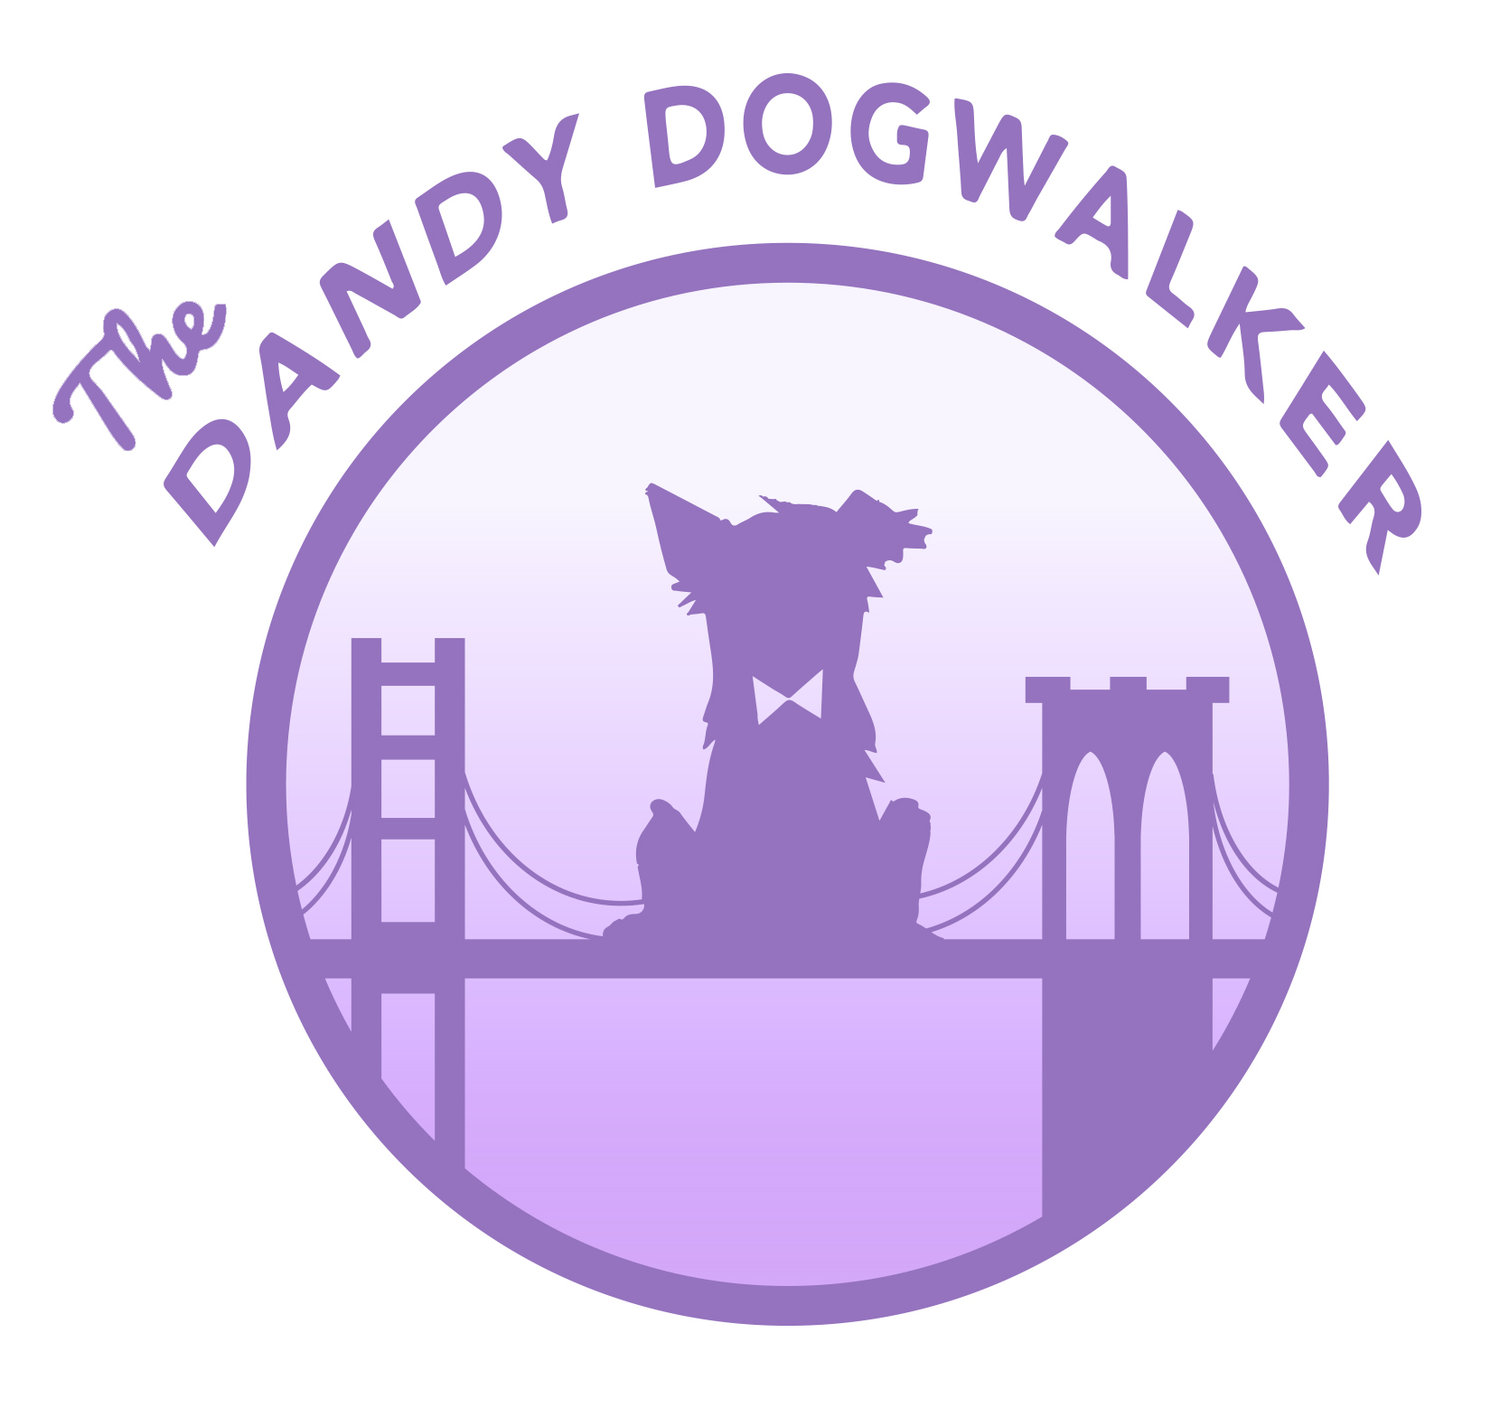 The Dandy Dogwalker